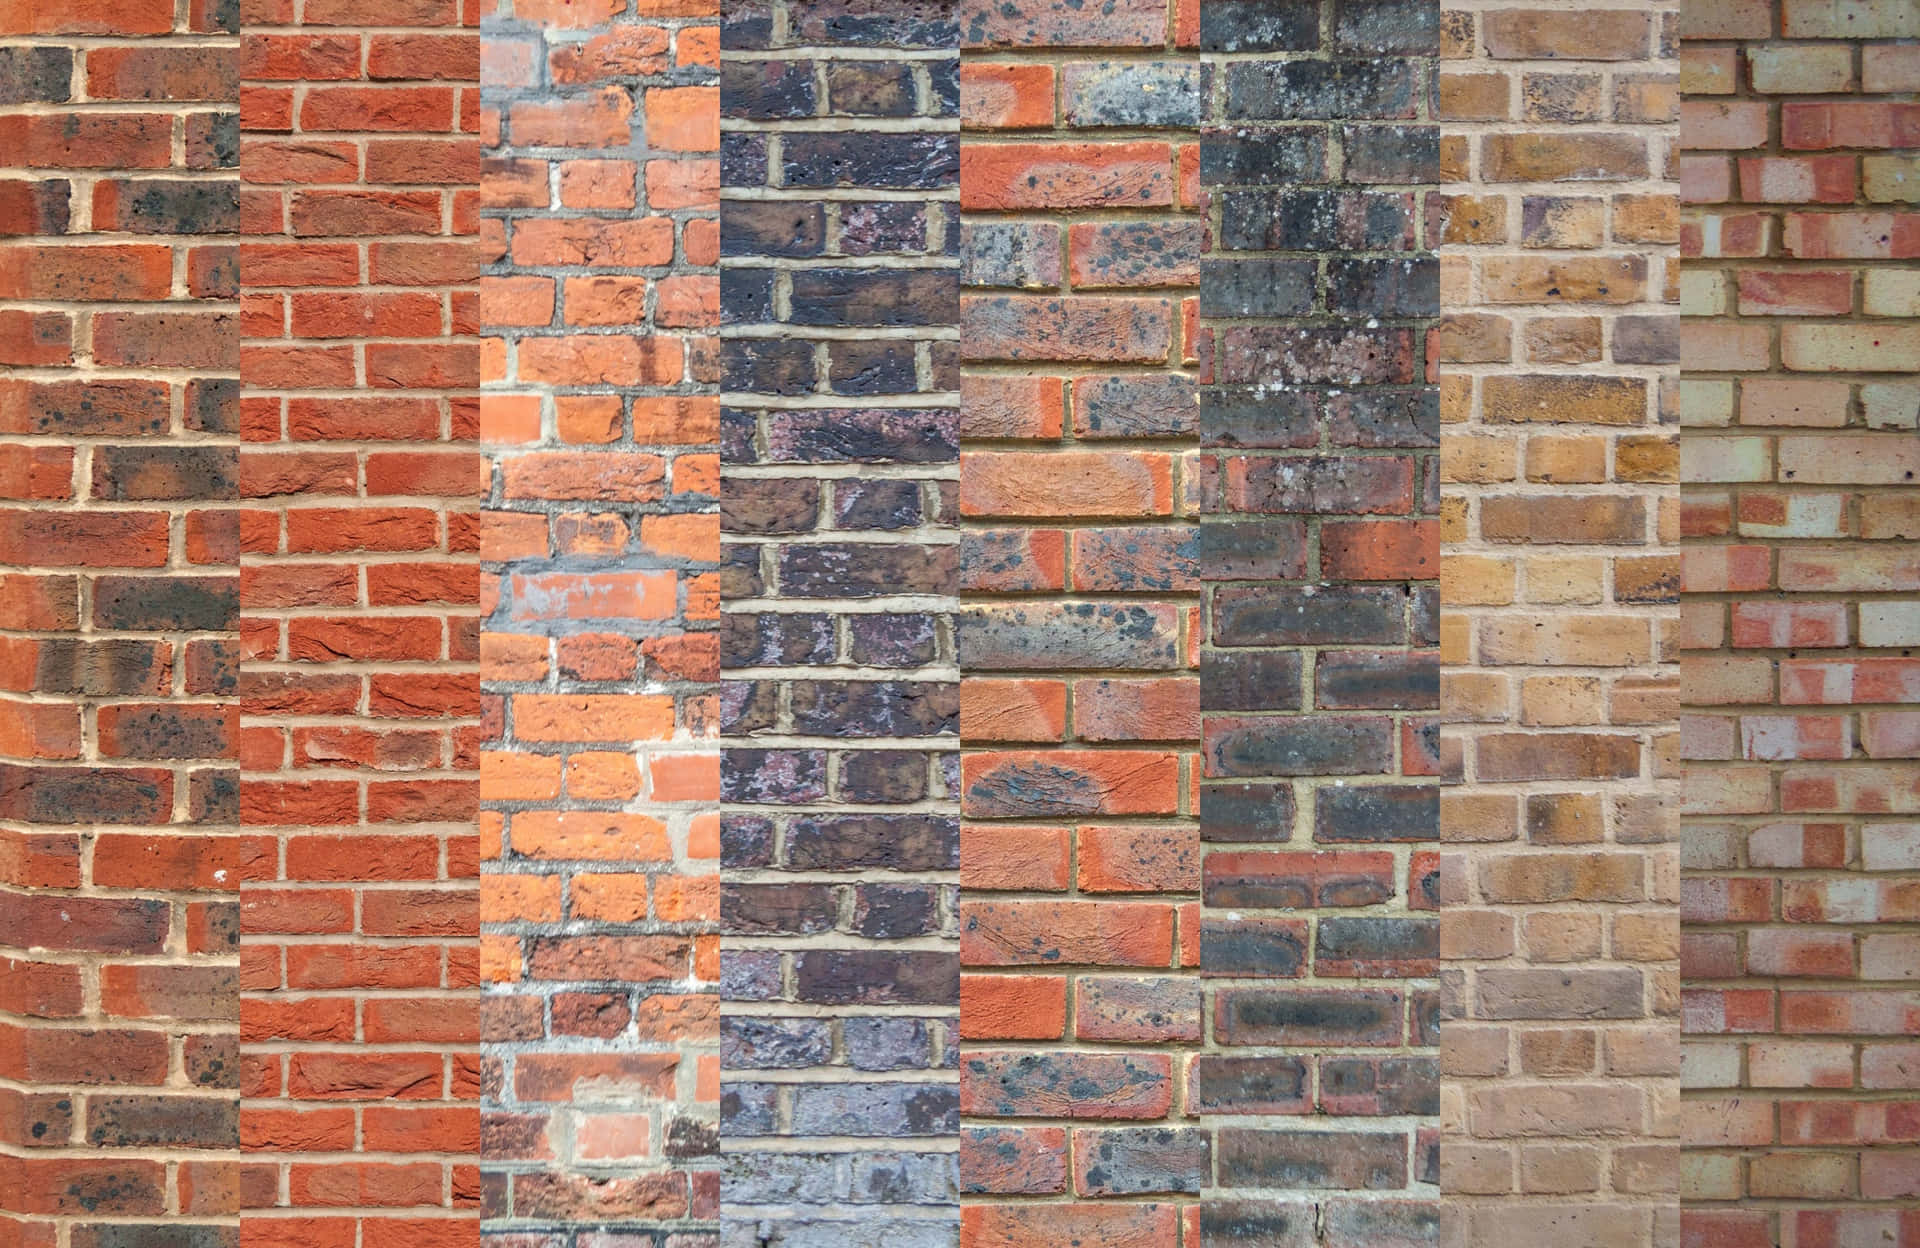 Caption: Intricate Brick Texture Pattern